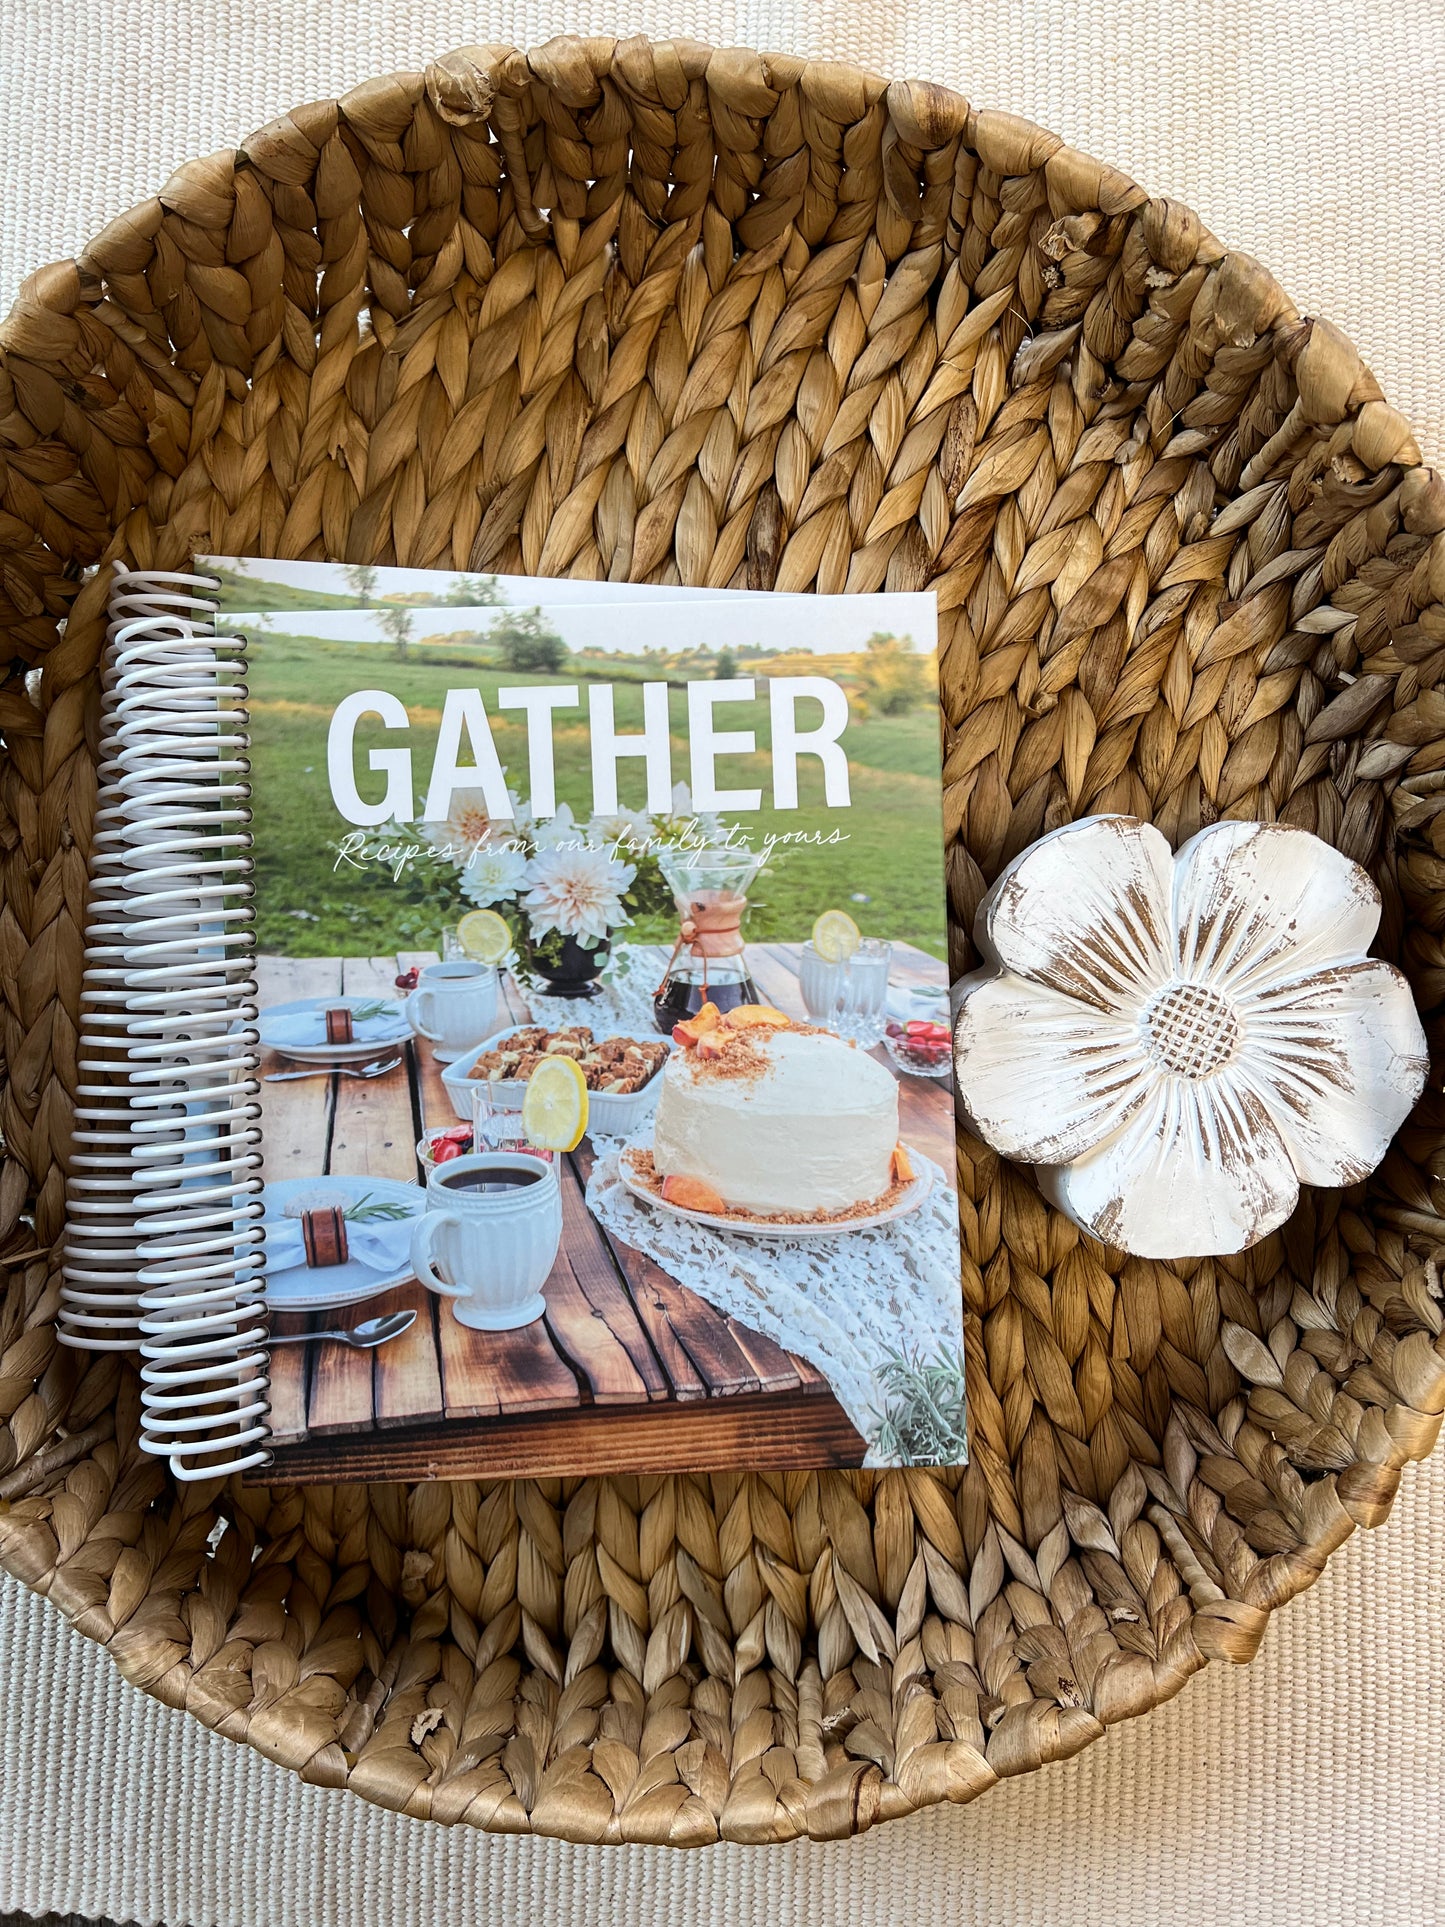 “Gather” Cookbook